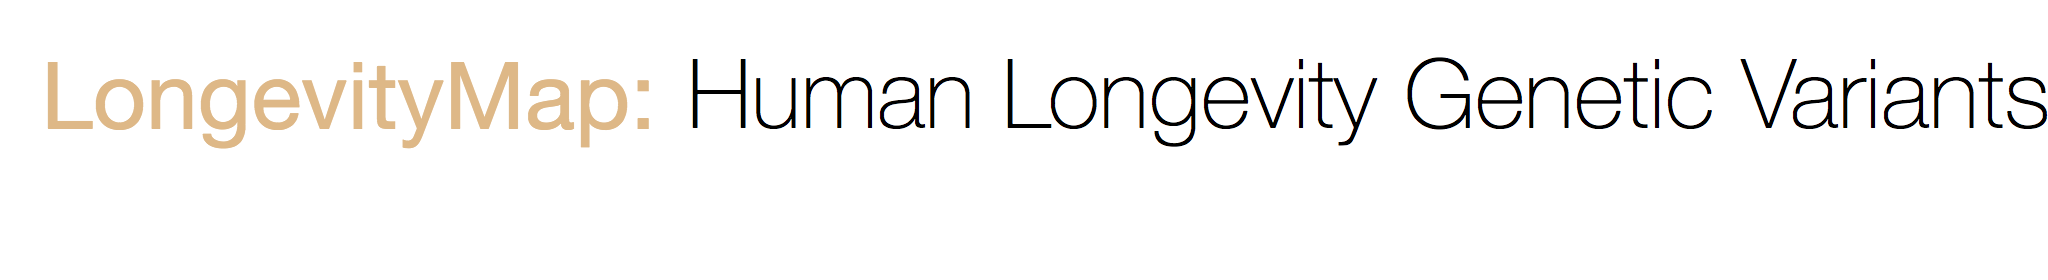 LongevityMap: The Human Longevity Variants Database